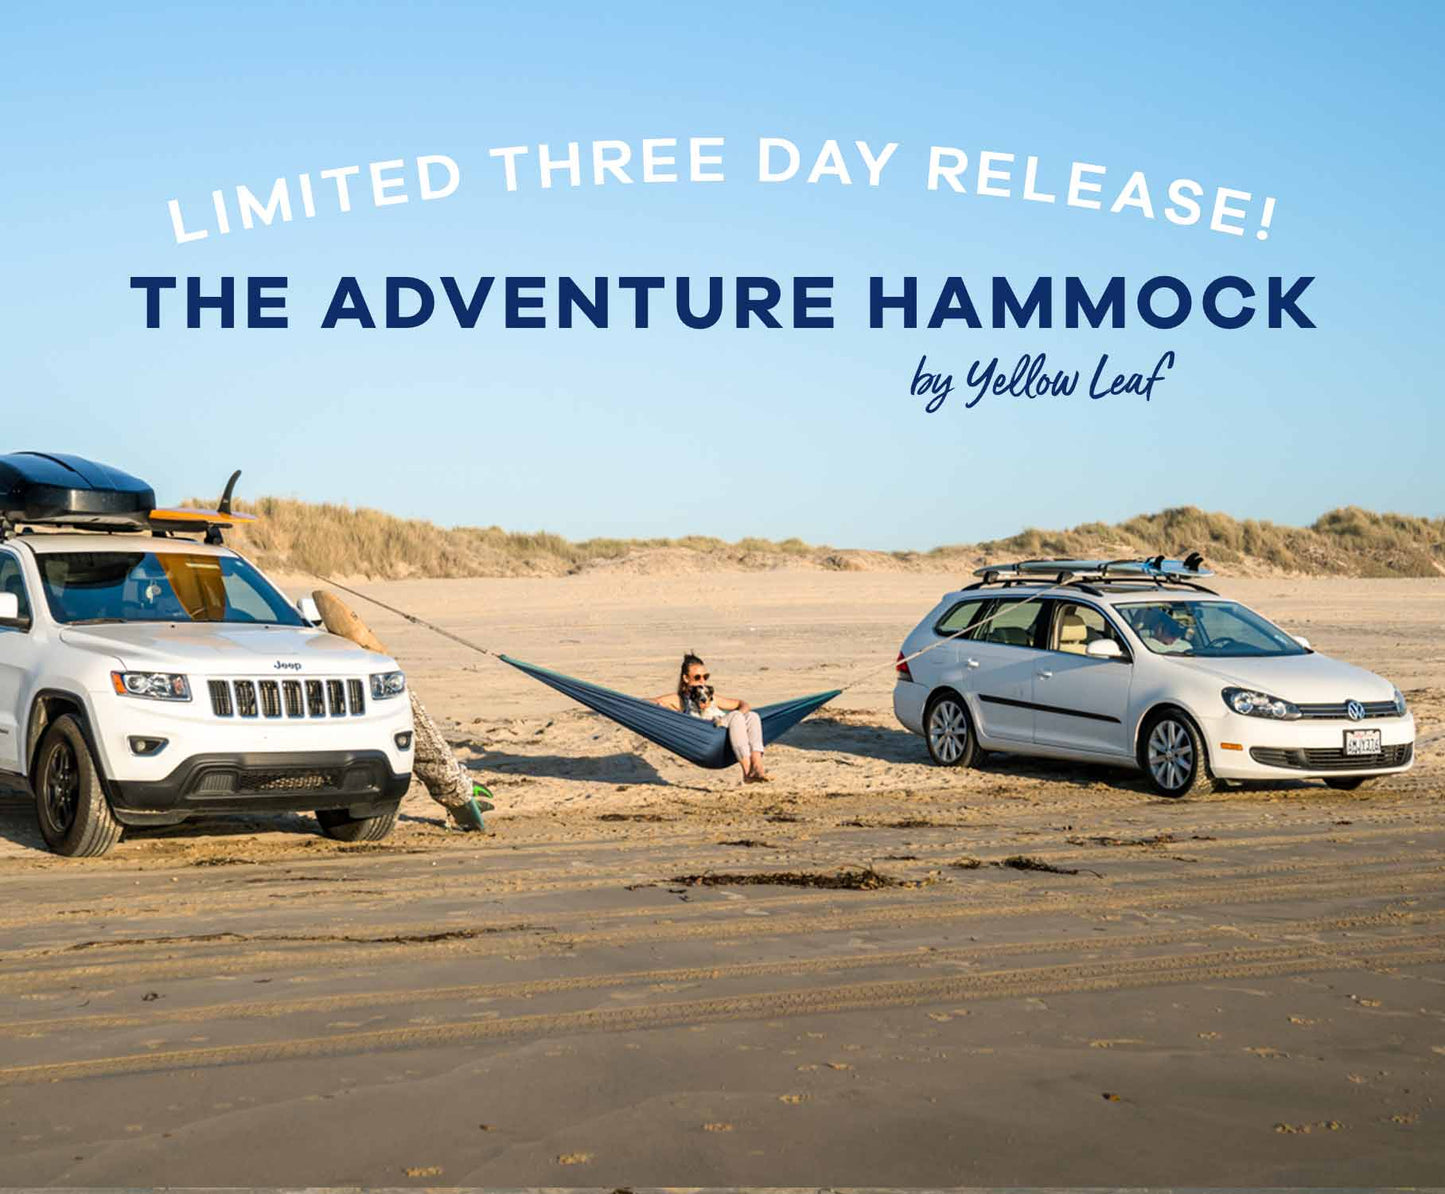 The Adventure Hammock